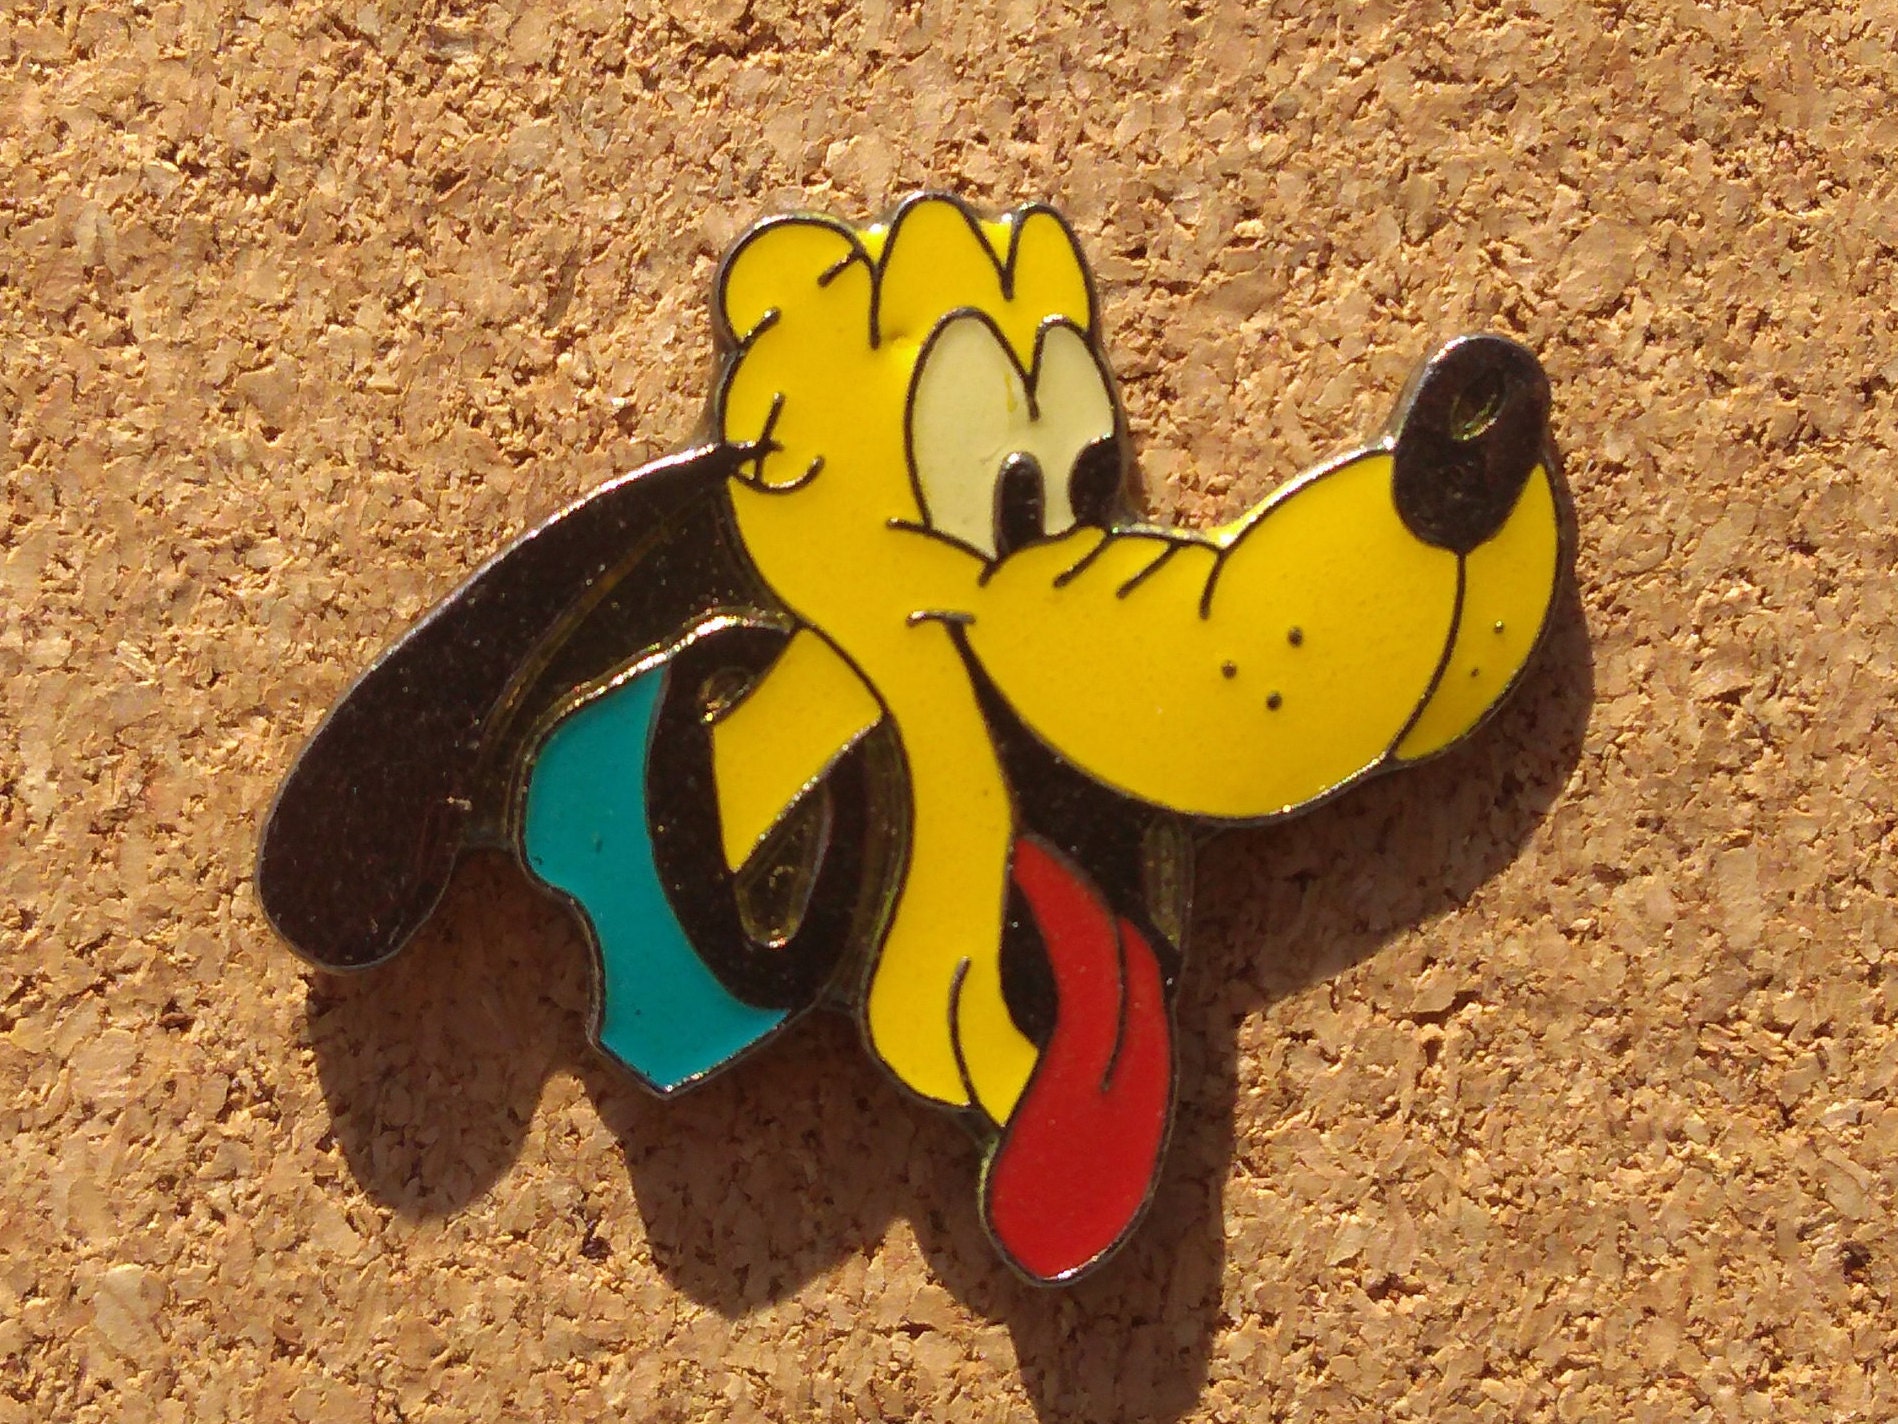 Vintage Disney's Pluto the Dog Novelty Pin Back Button-PinPl